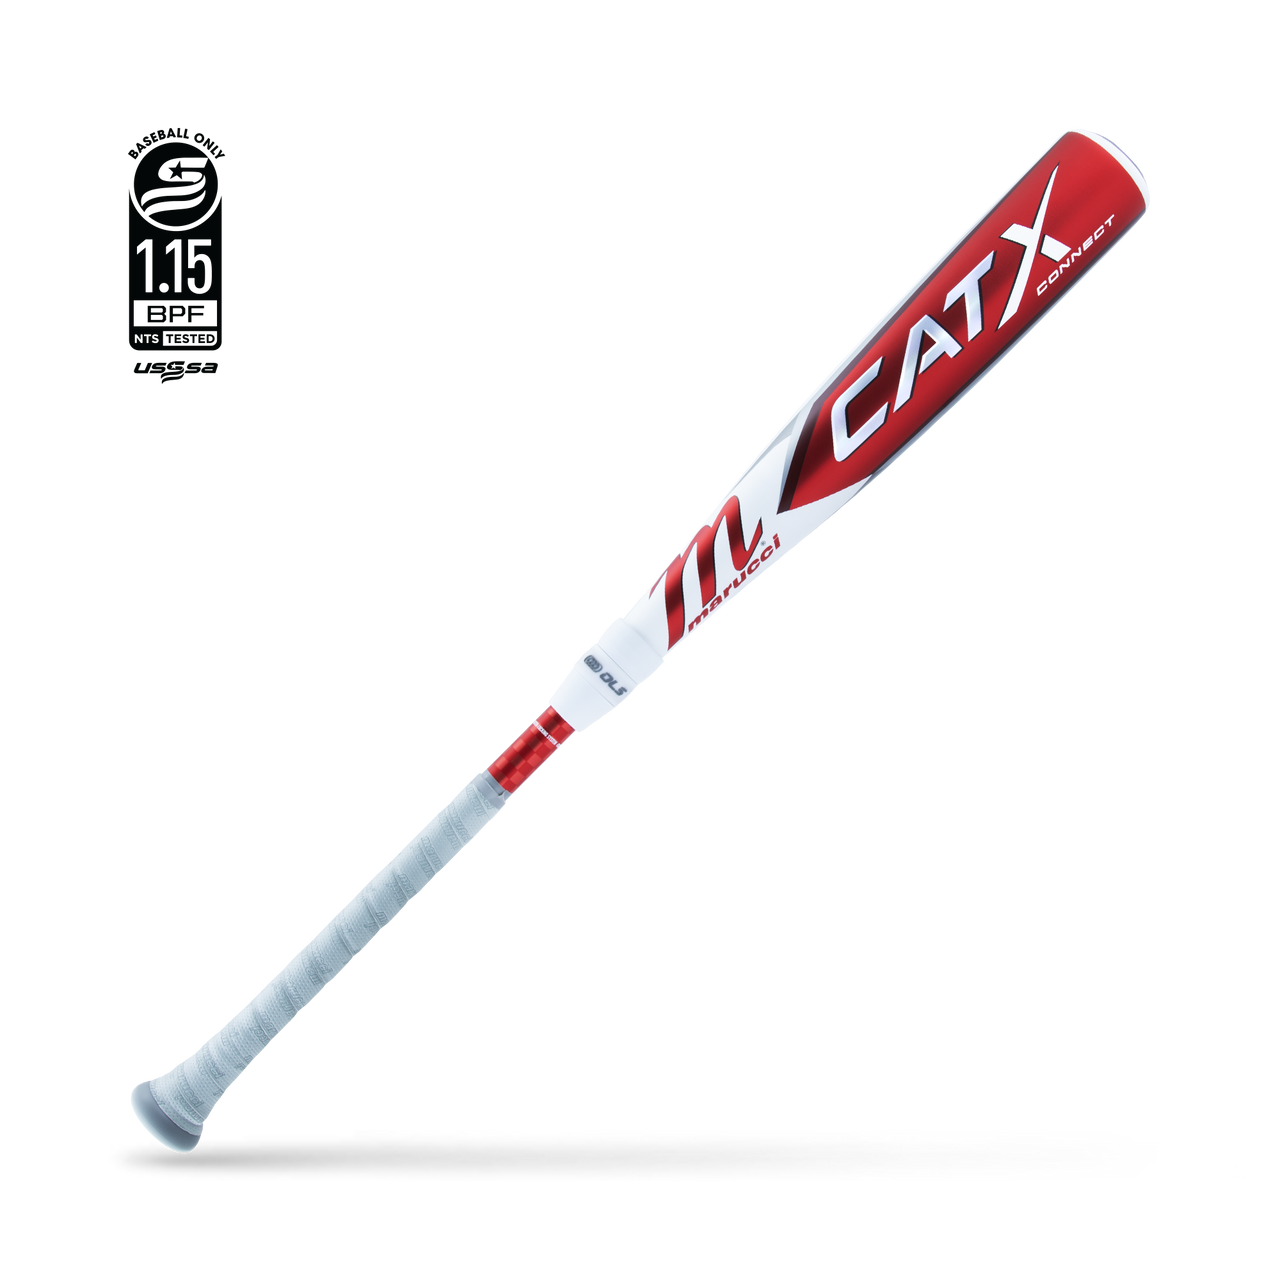 Marucci CATX CONNECT SL (-10) Baseball Bat (MSBCCX10)